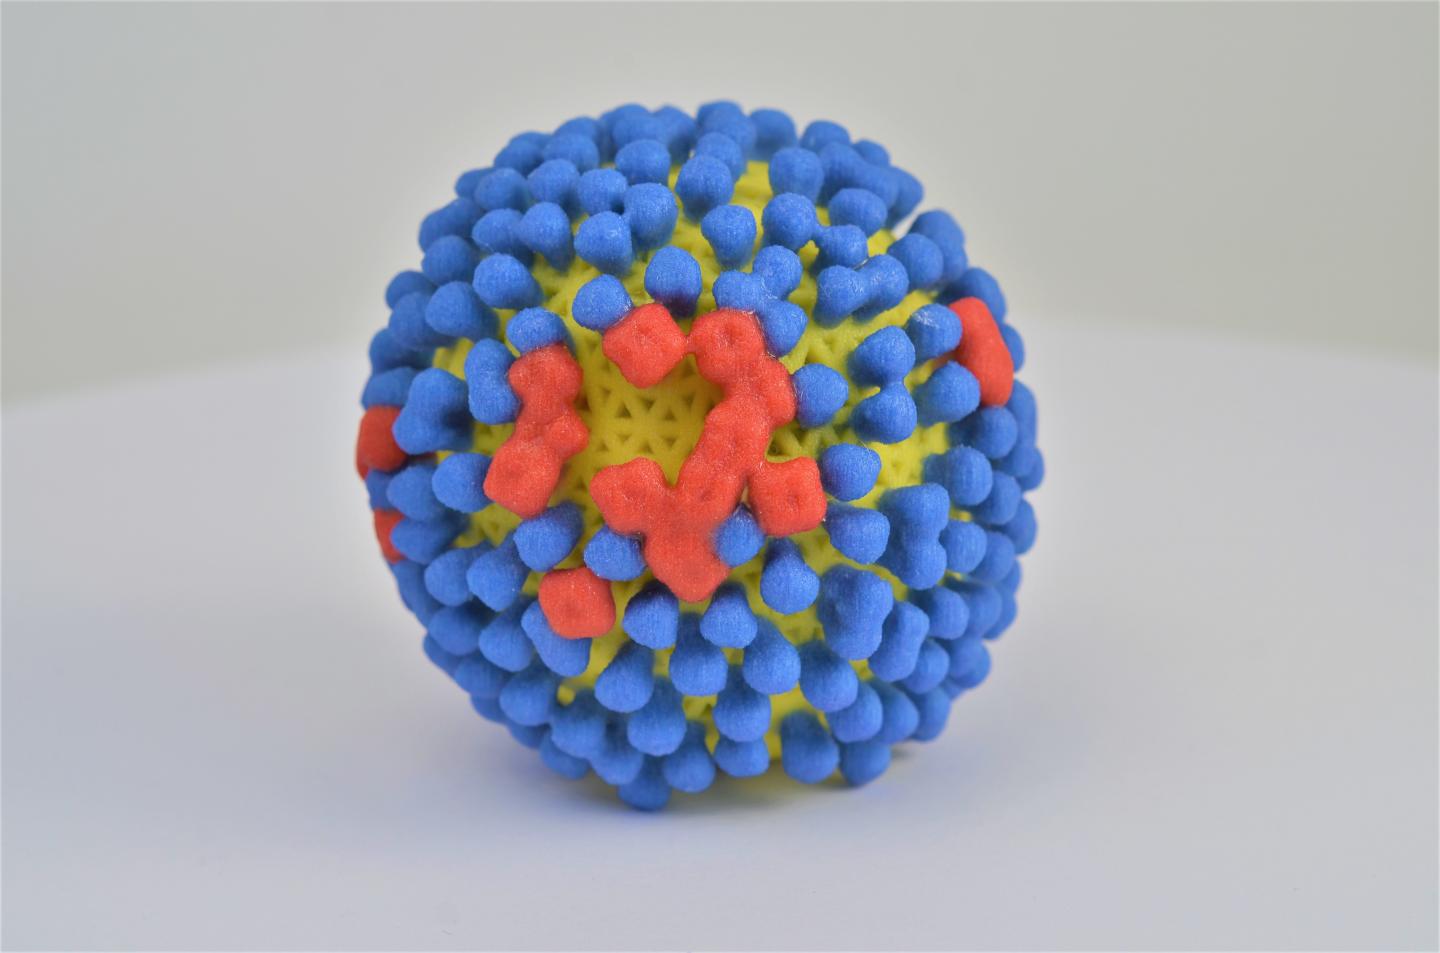 A Model of Influenza Virus